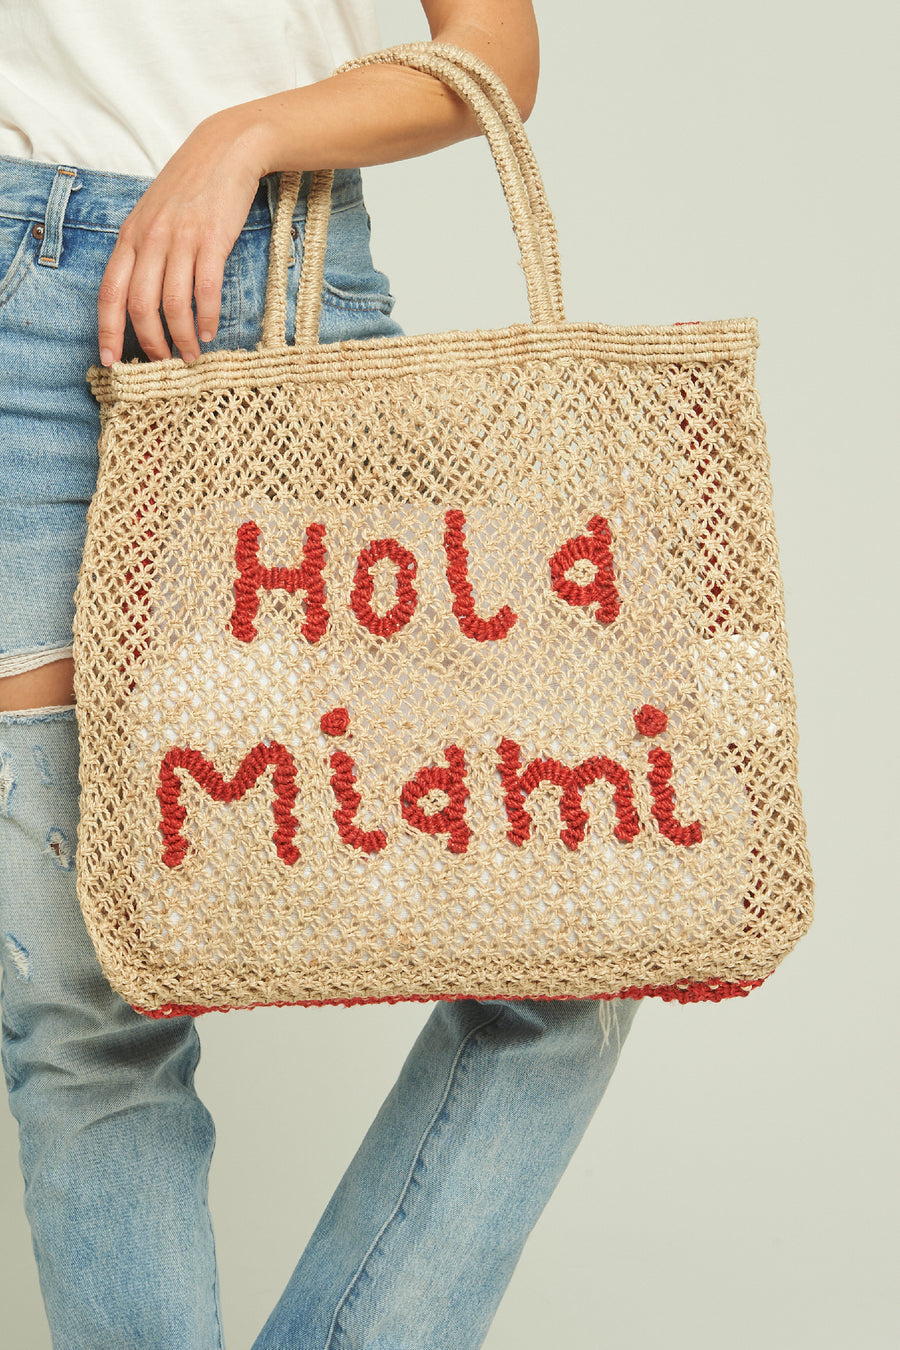 The Jacksons Hola Miami Bag – shopsigal